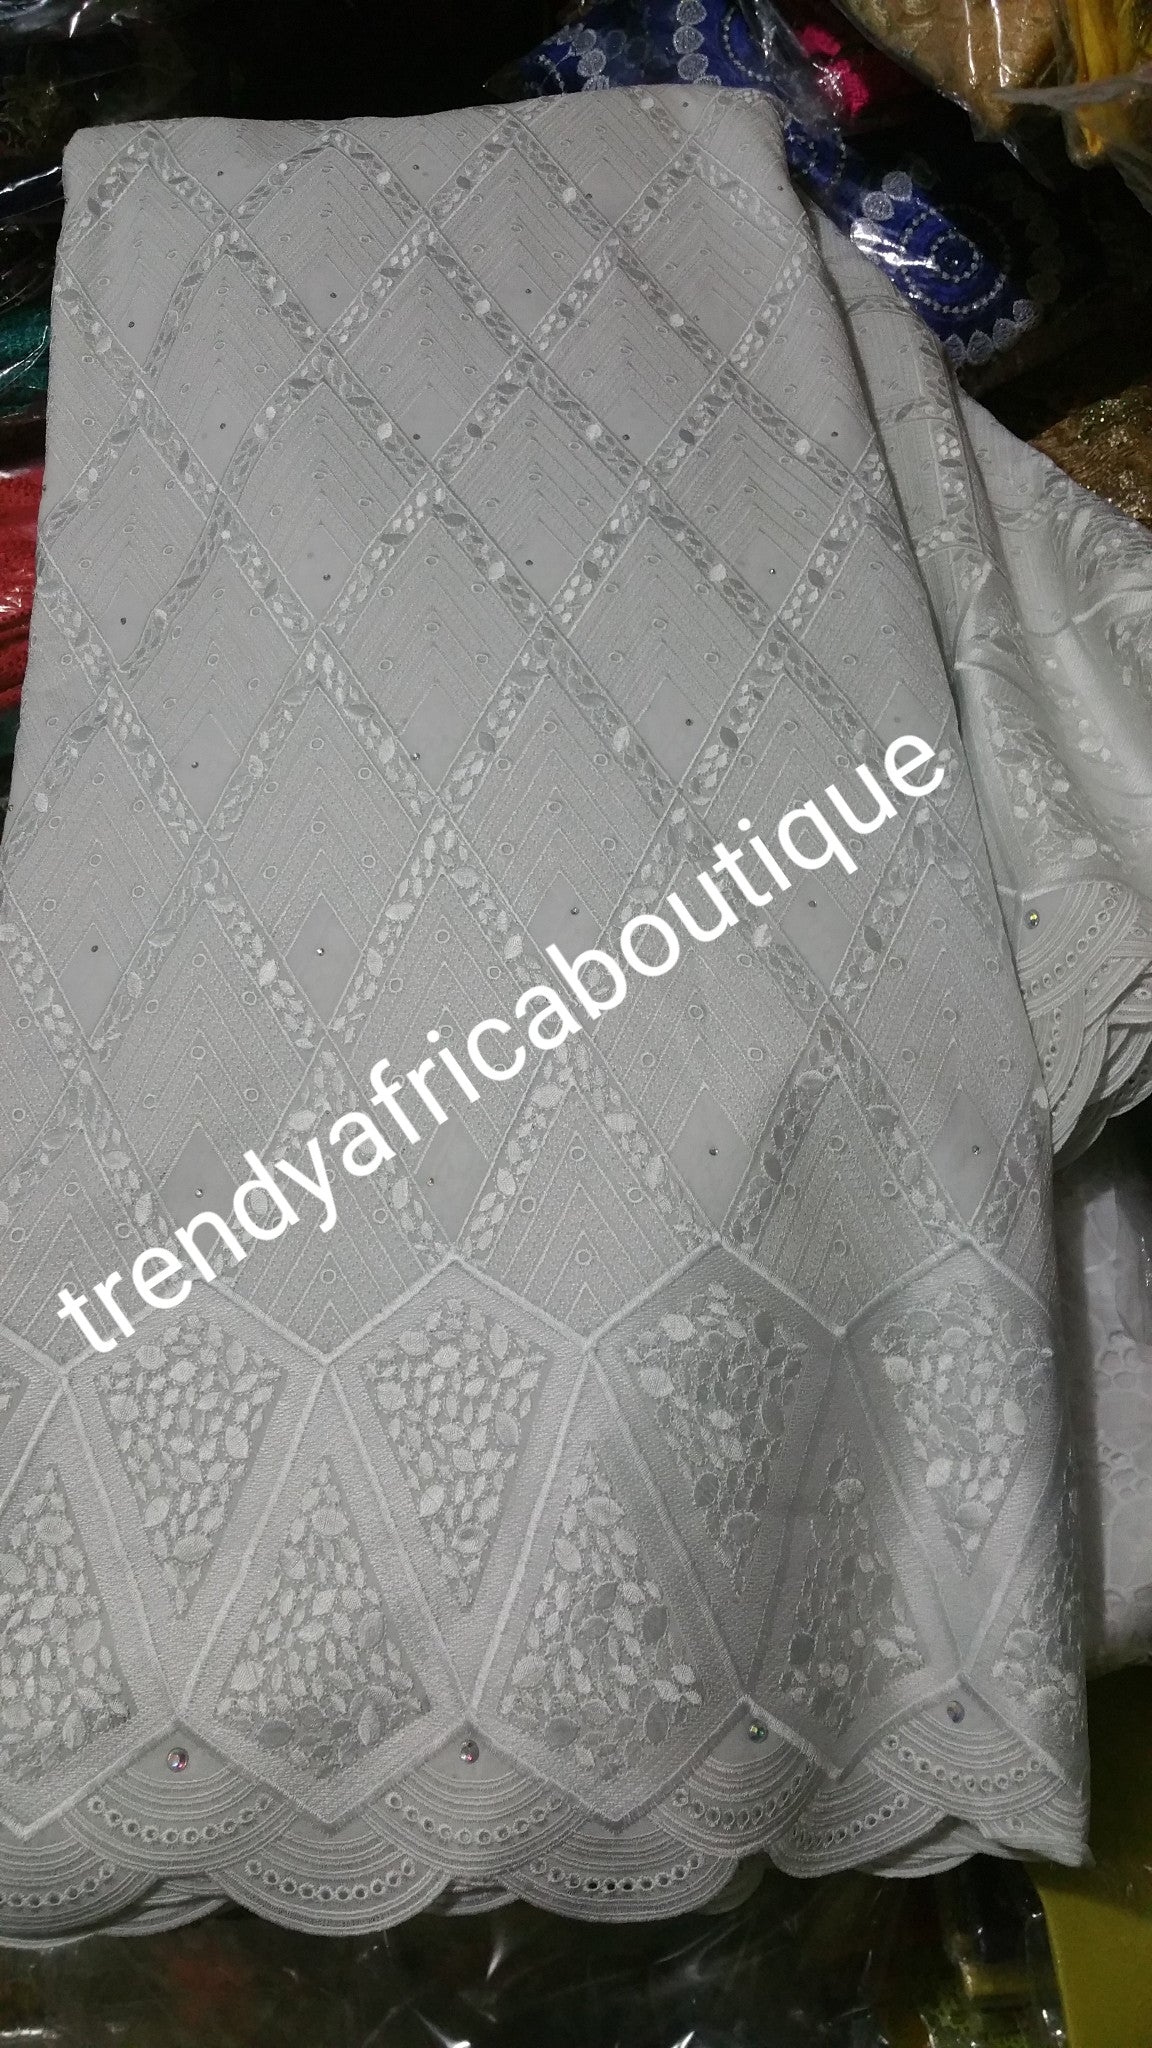 Exclusive design Swiss lace fabric. Original quality design. Soft texture. Sold per 5yds.